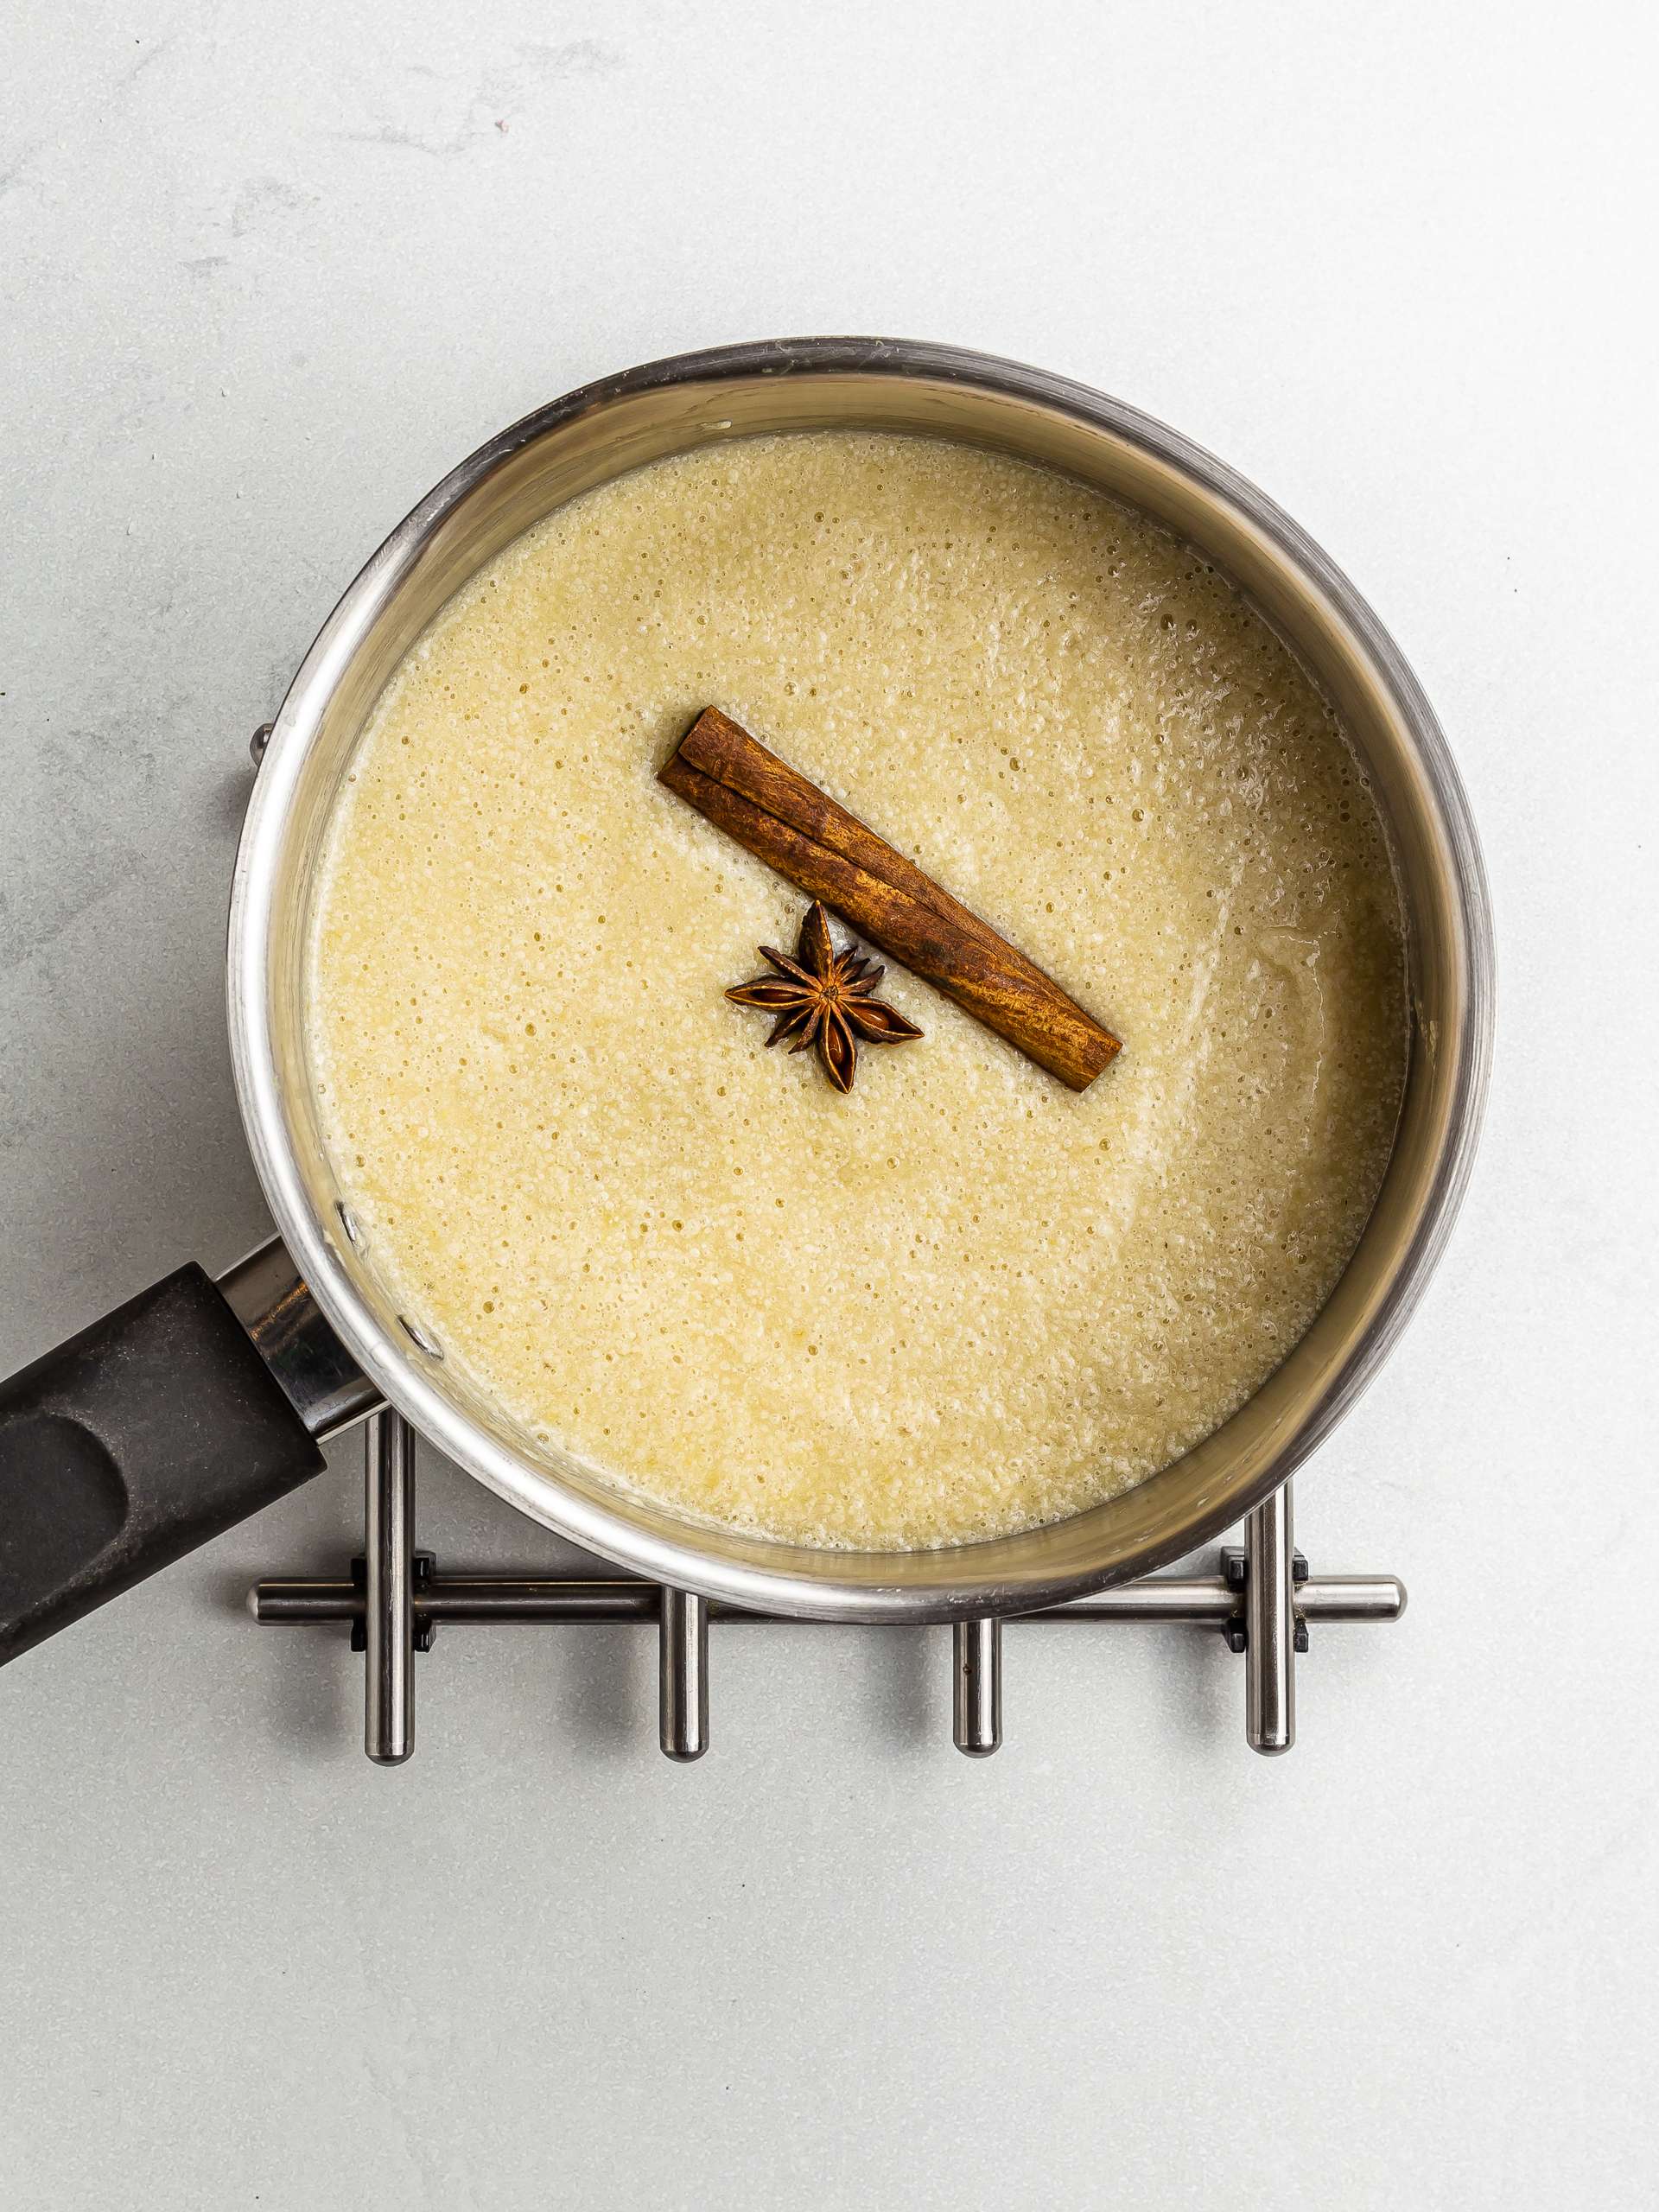 cooking plantain porridge in a pot